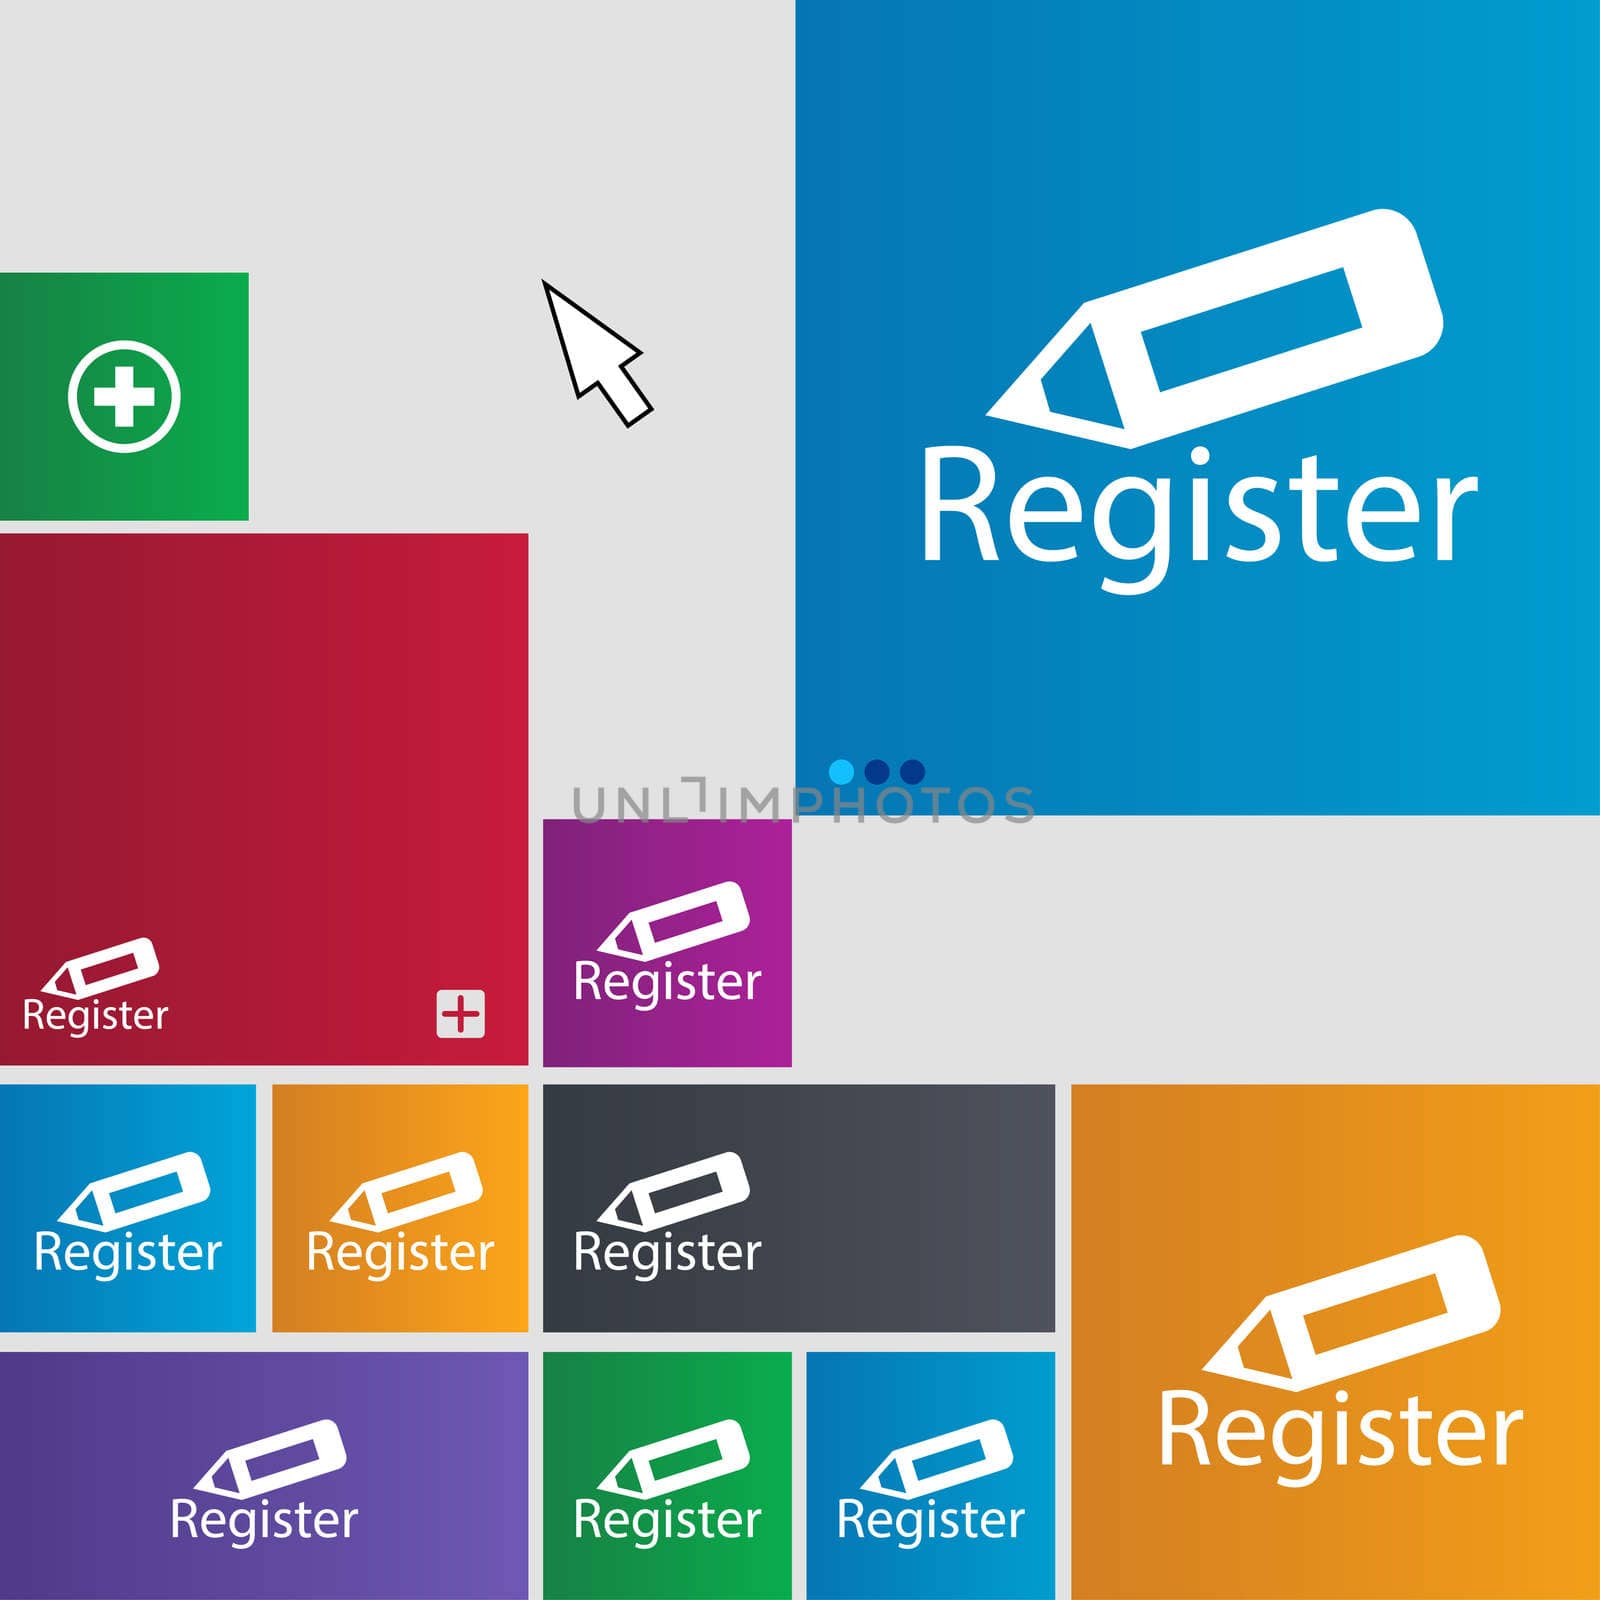 Register sign icon. Membership symbol. Website navigation. Set of colored buttons. illustration